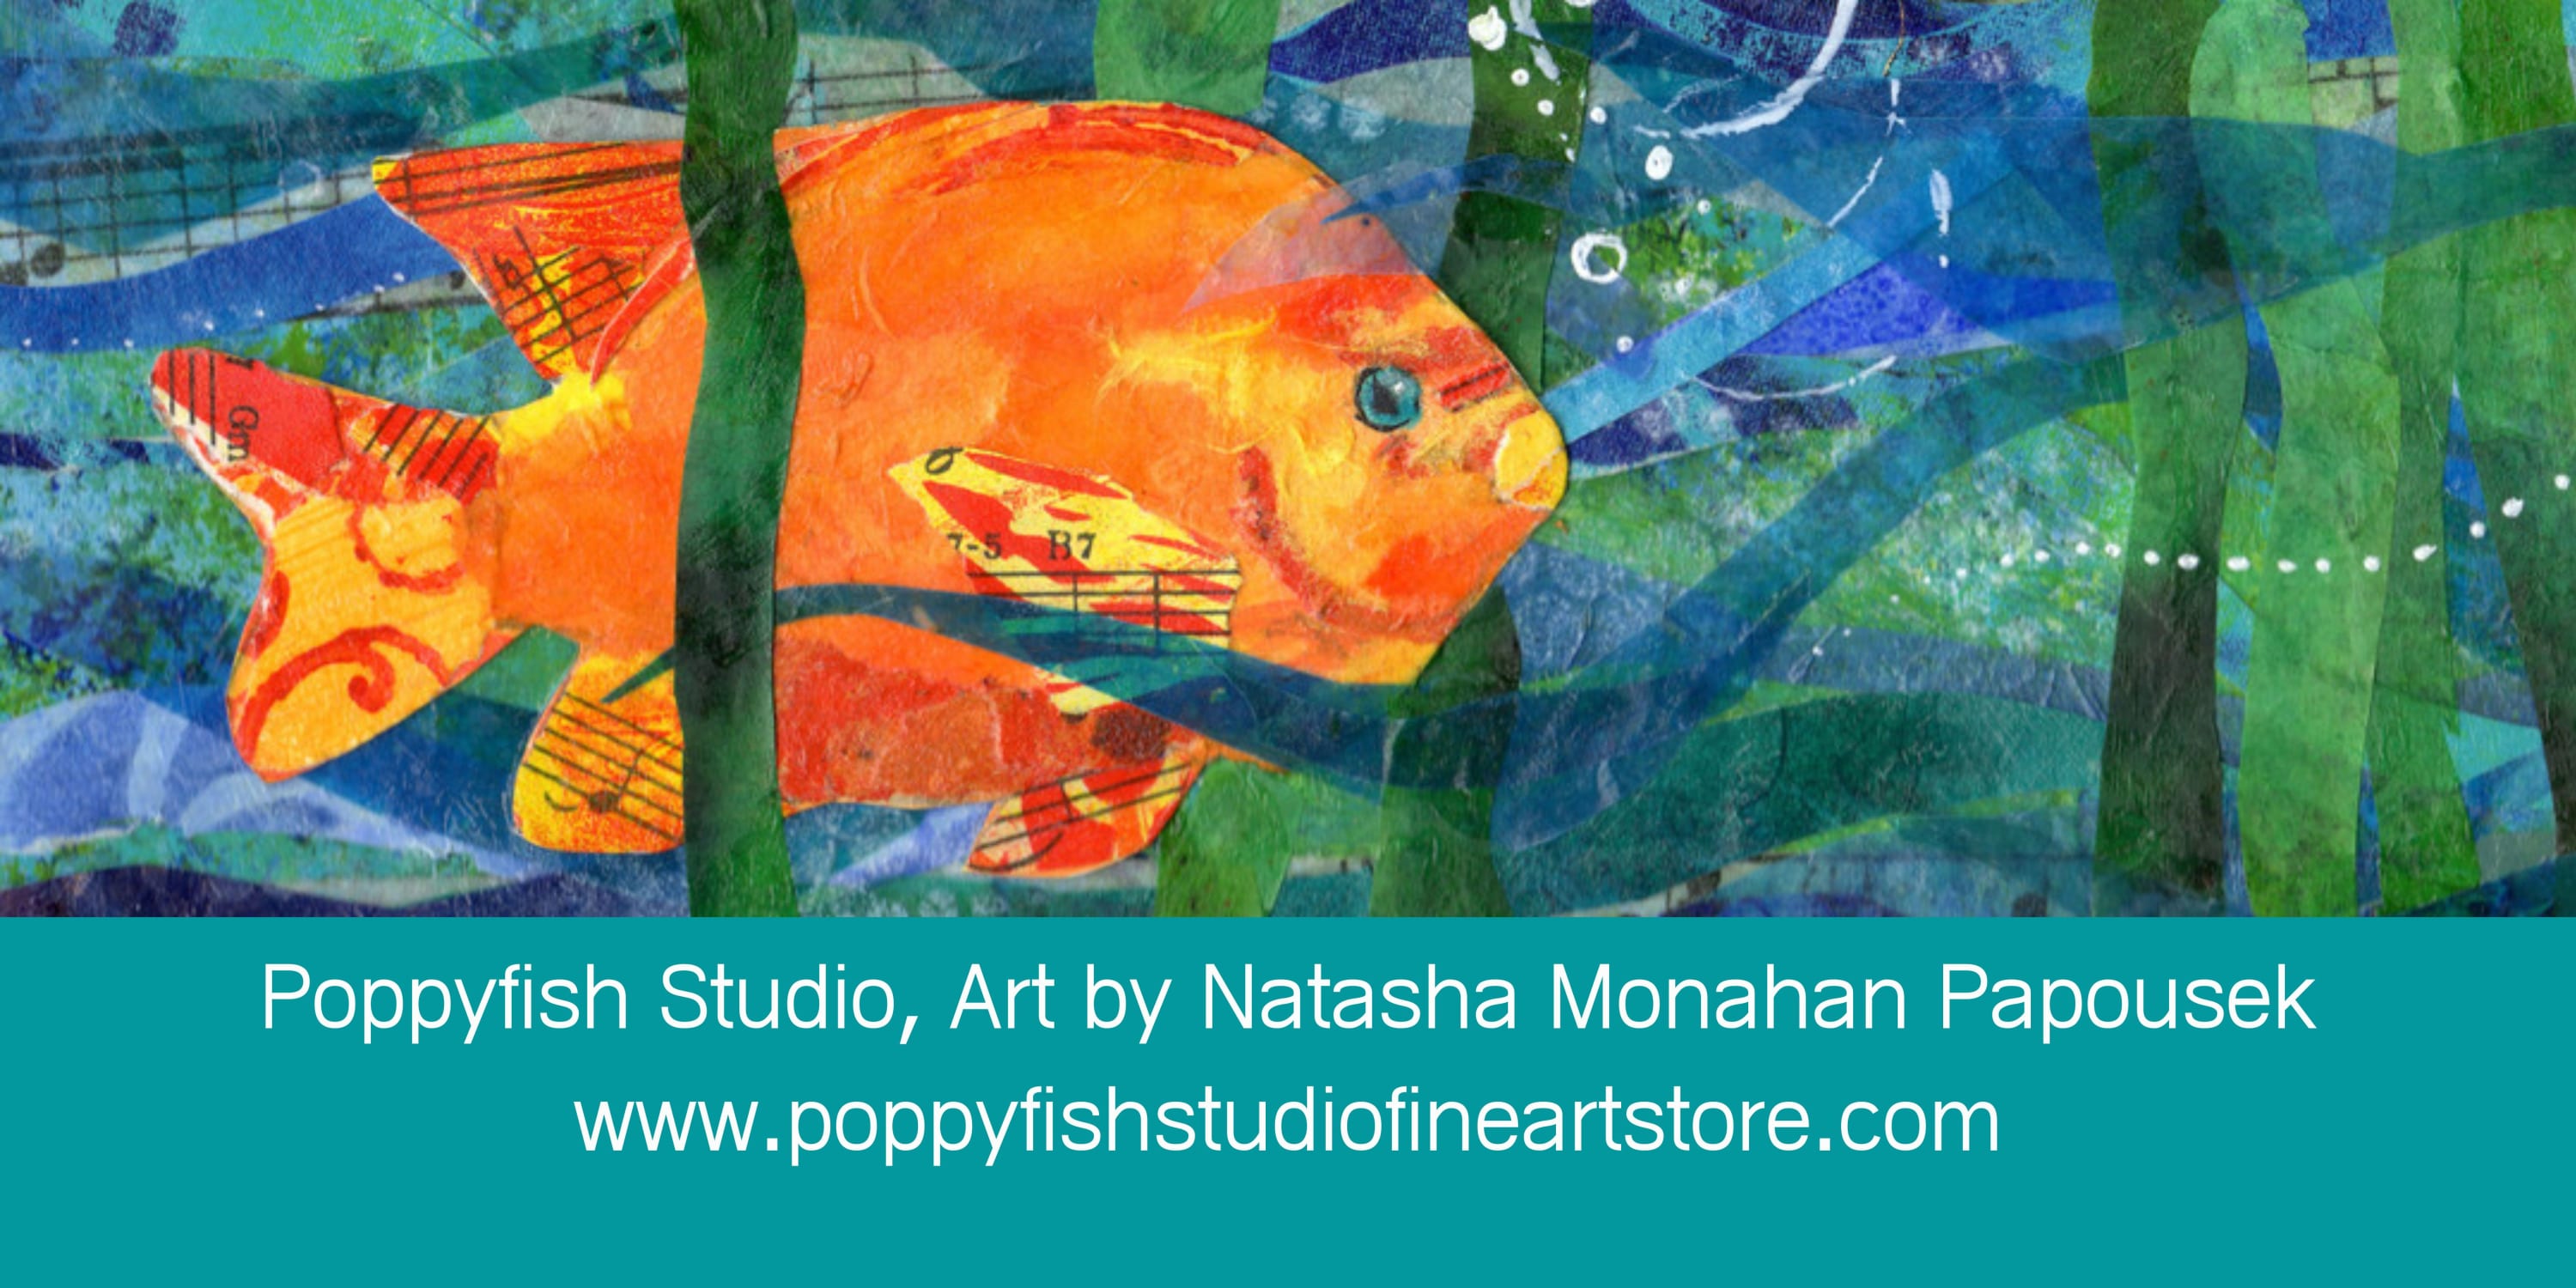 About Poppyfish Studio: The Art of Natasha Monahan Papousek